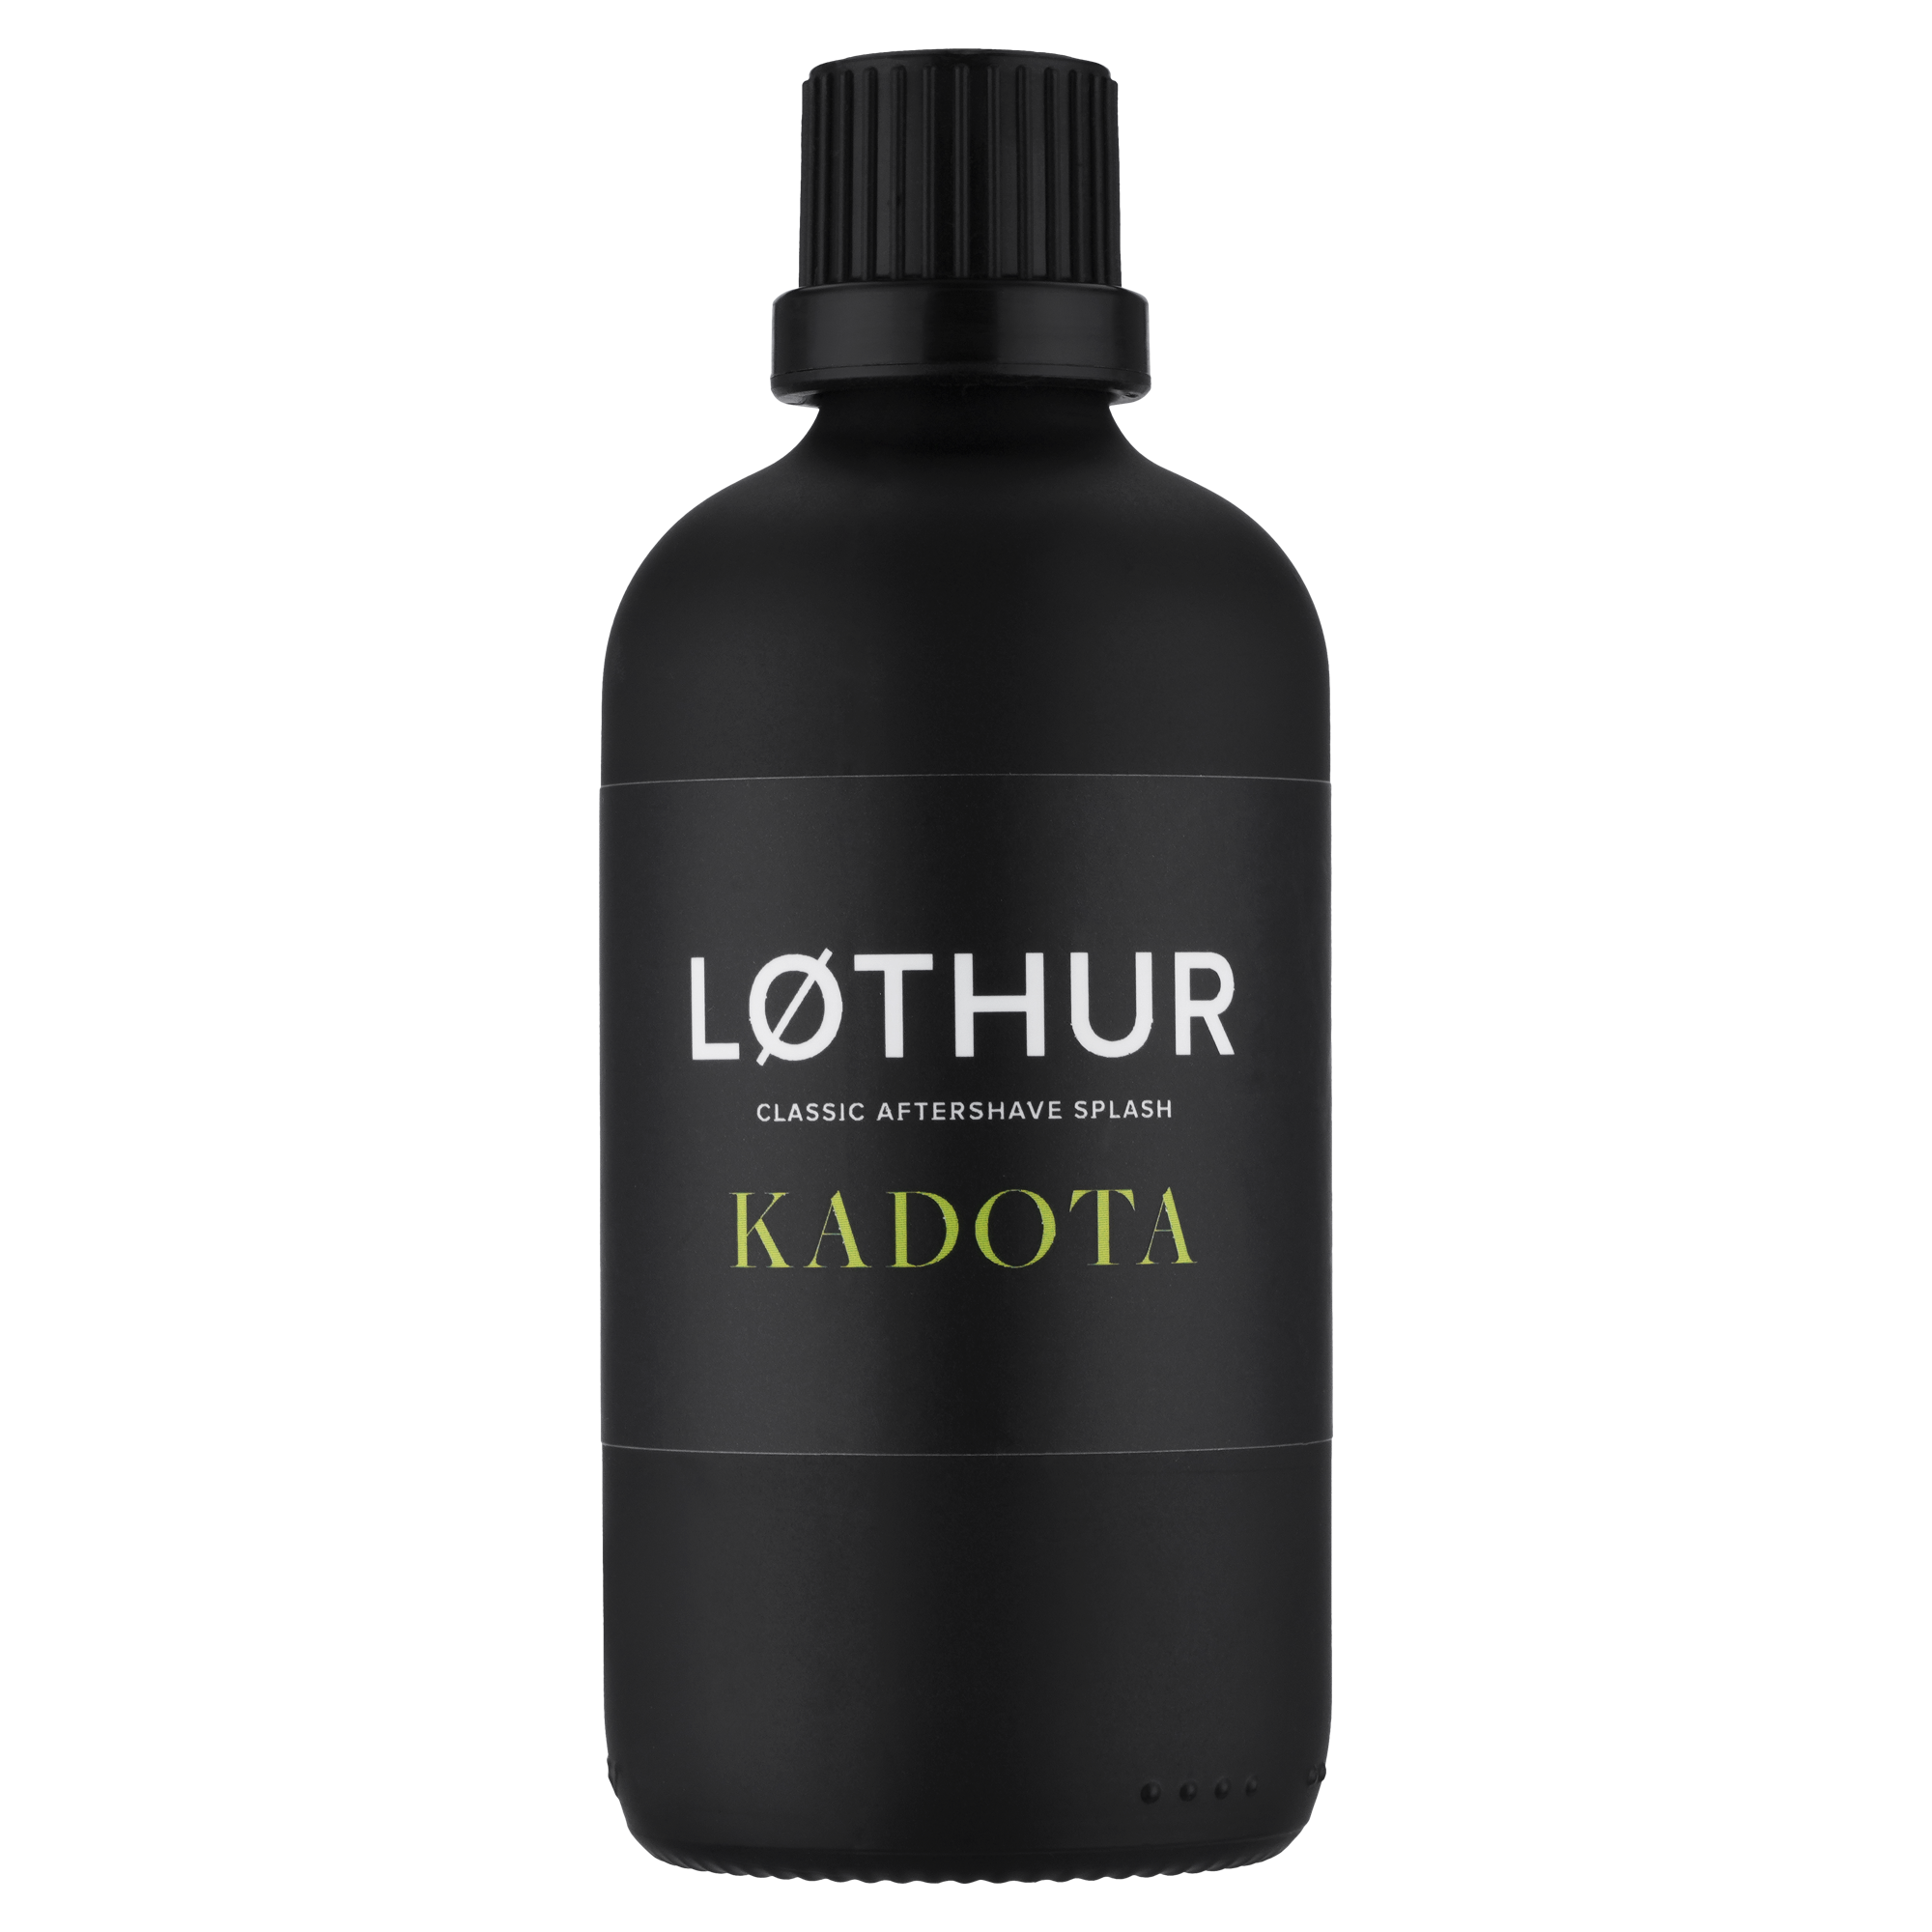 Lothur Kadota Classic Aftershave Splash